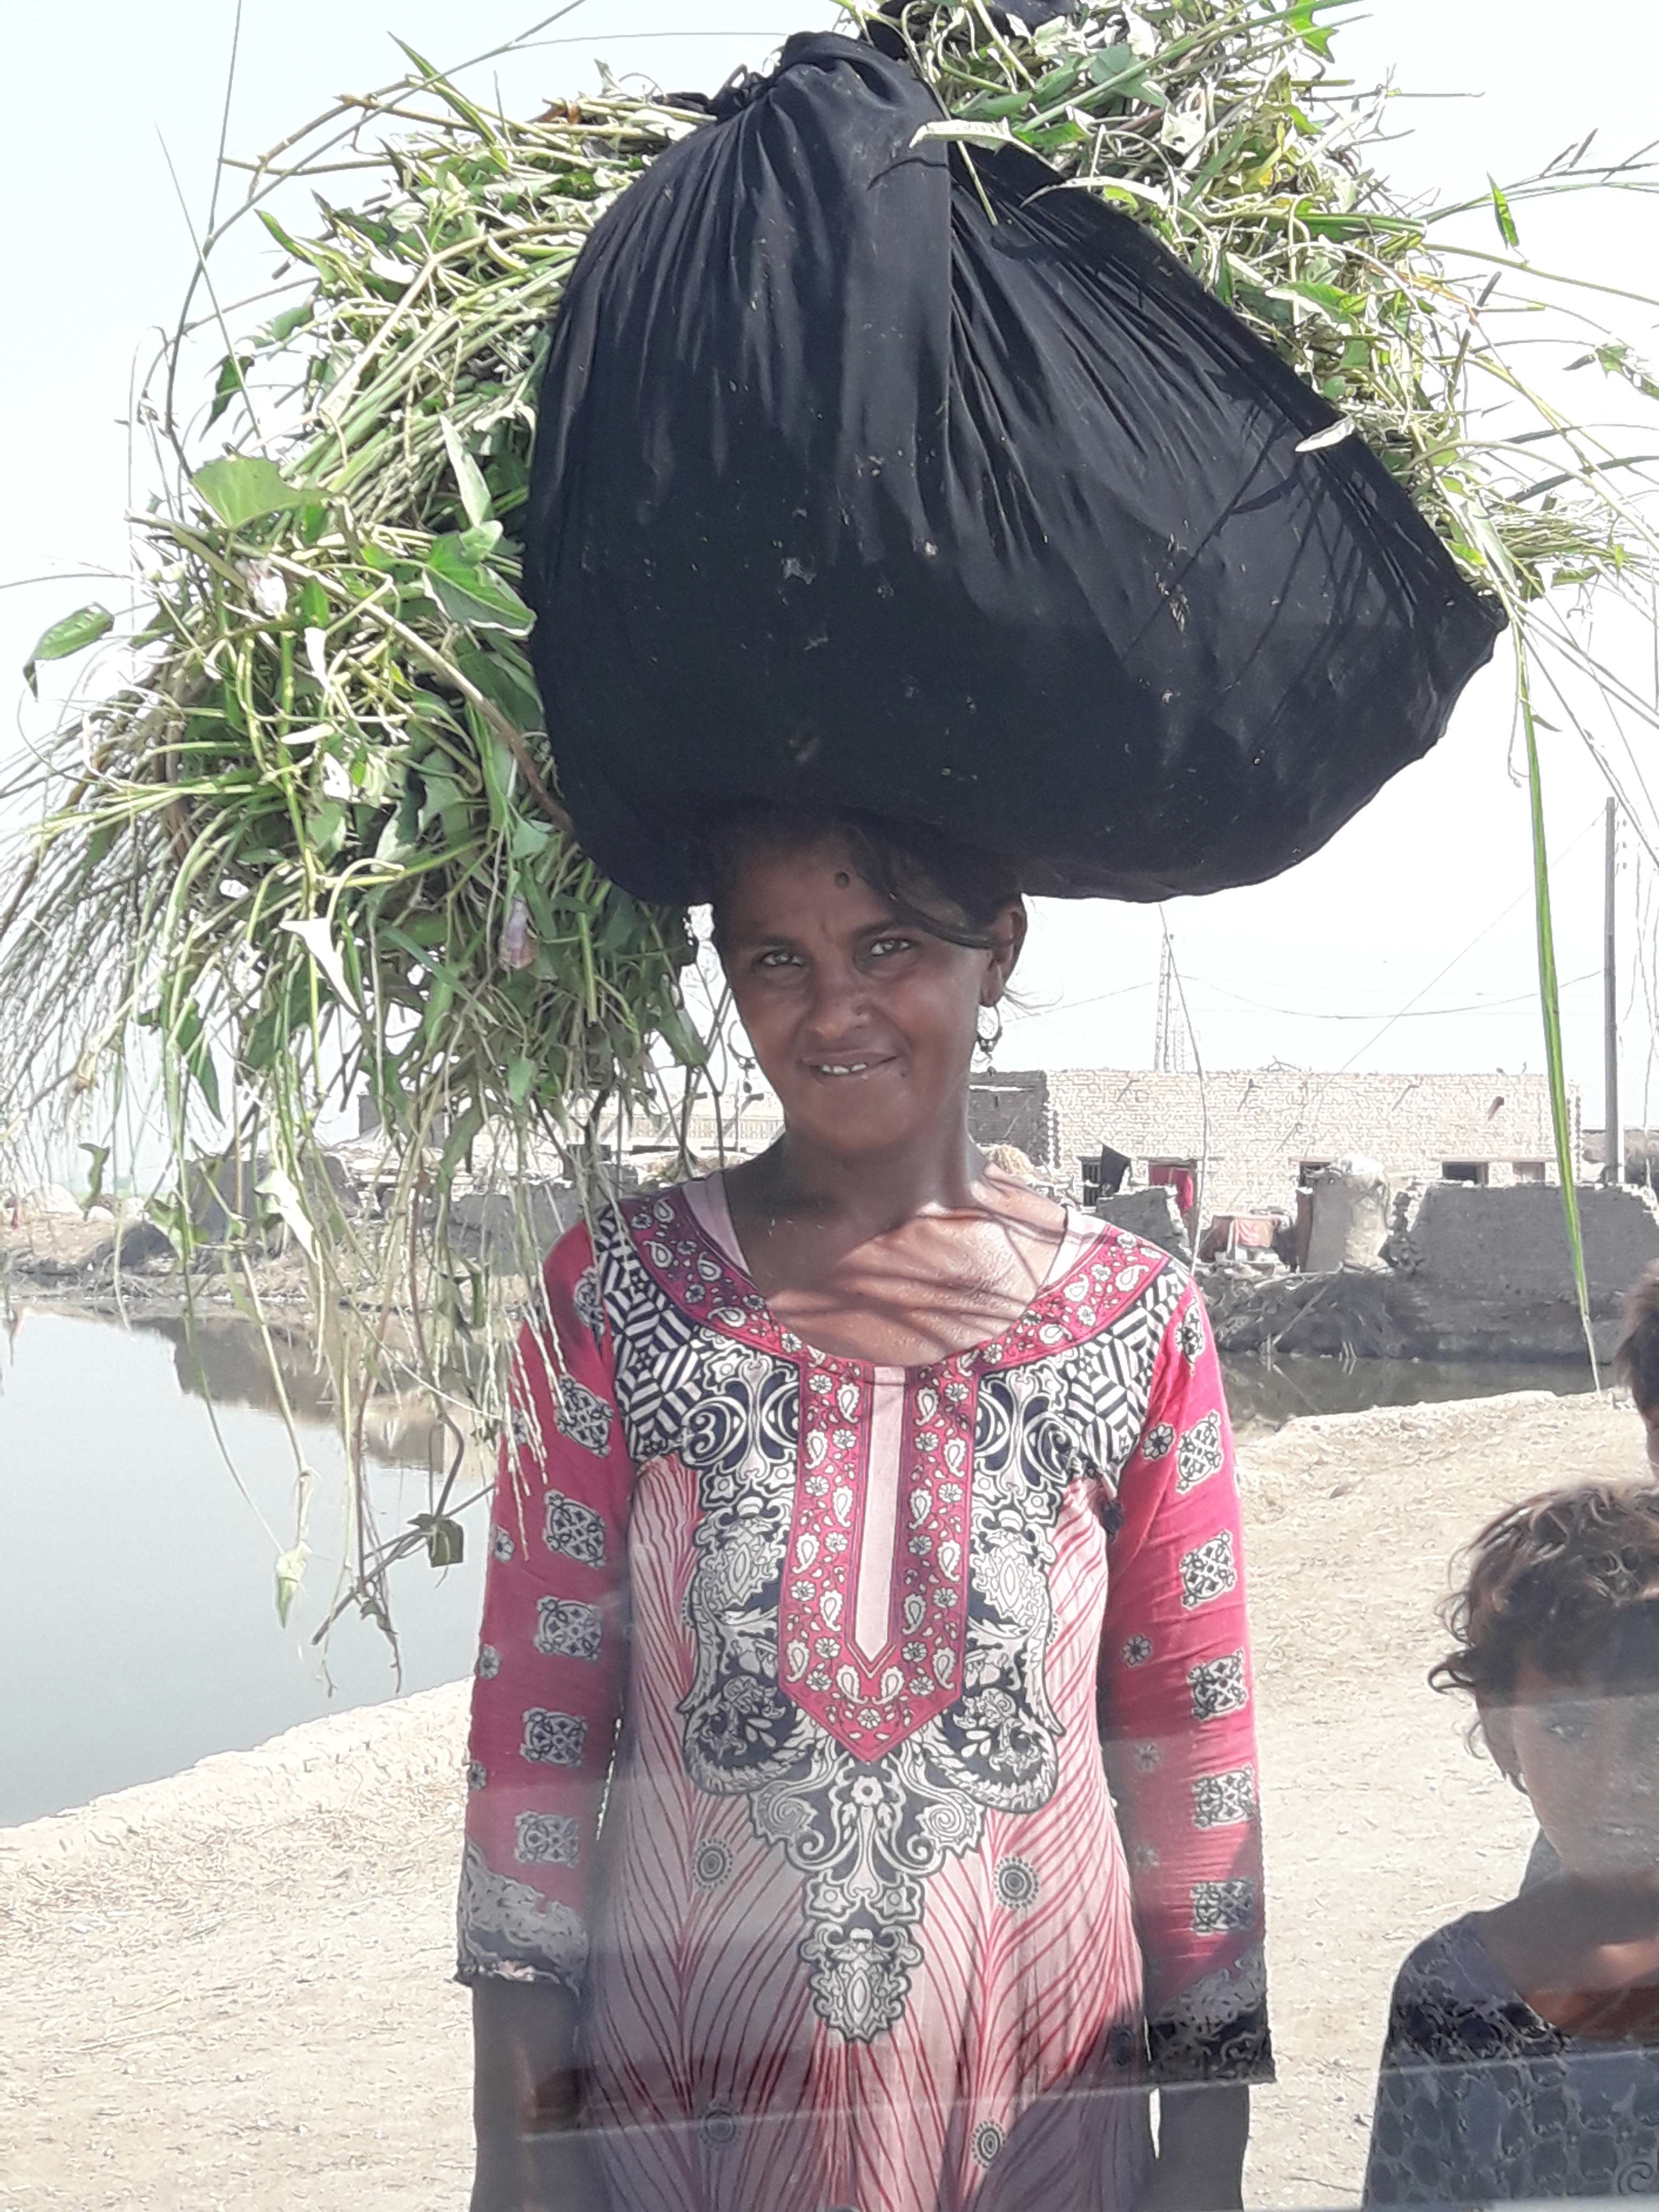 Women do the farming work in many villages around Sindh